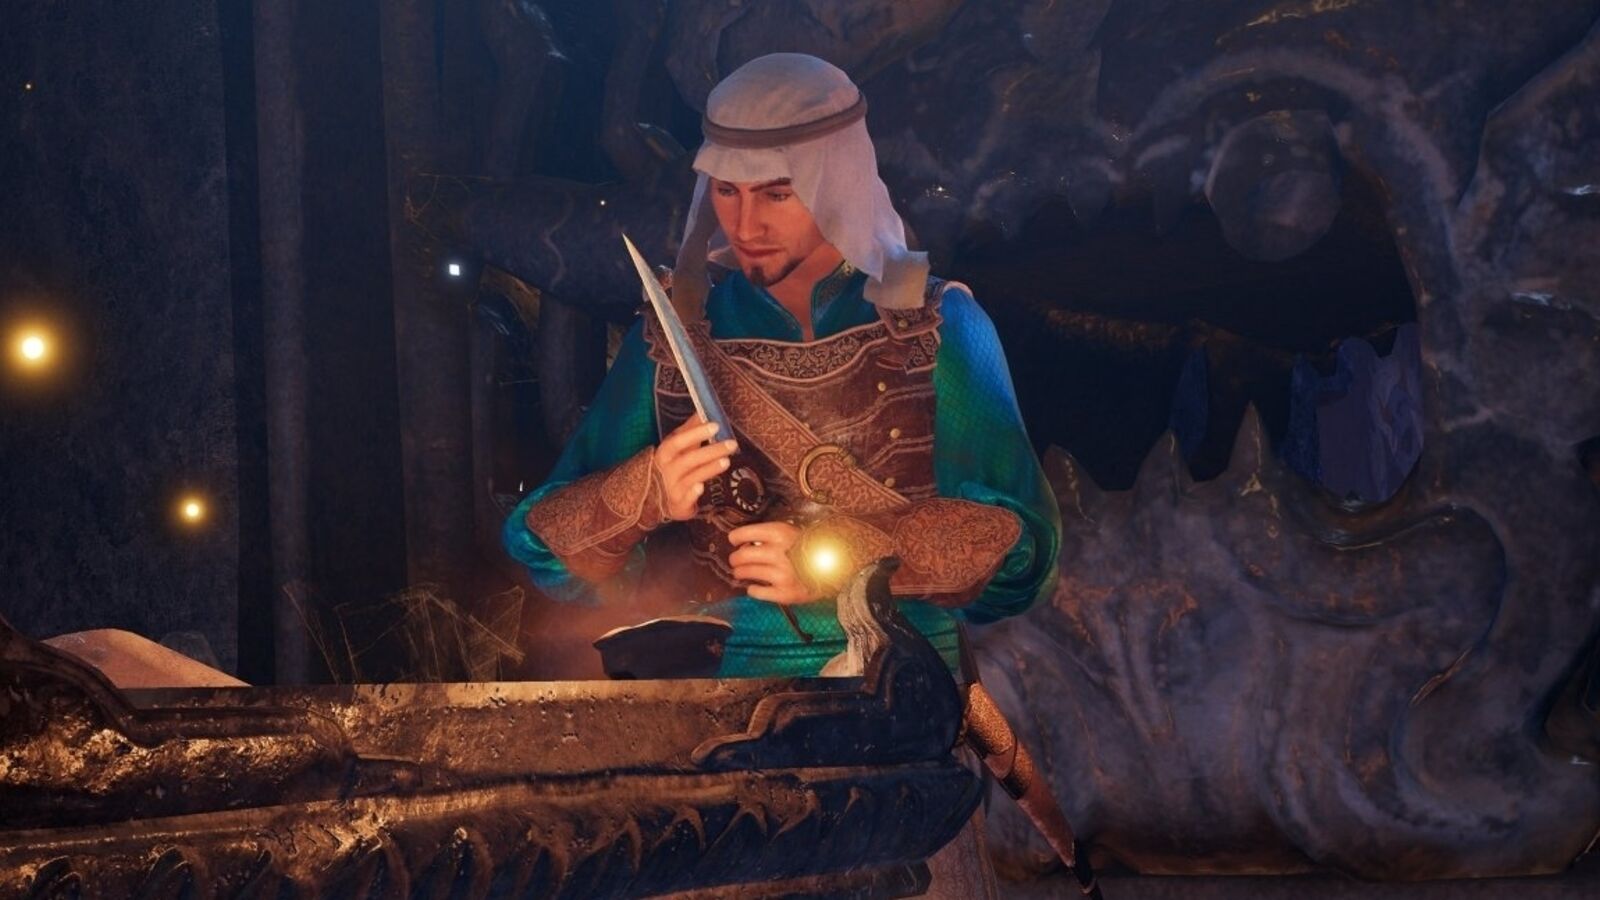 Prince of Persia: Warrior Within HD - iPad - Trailer 